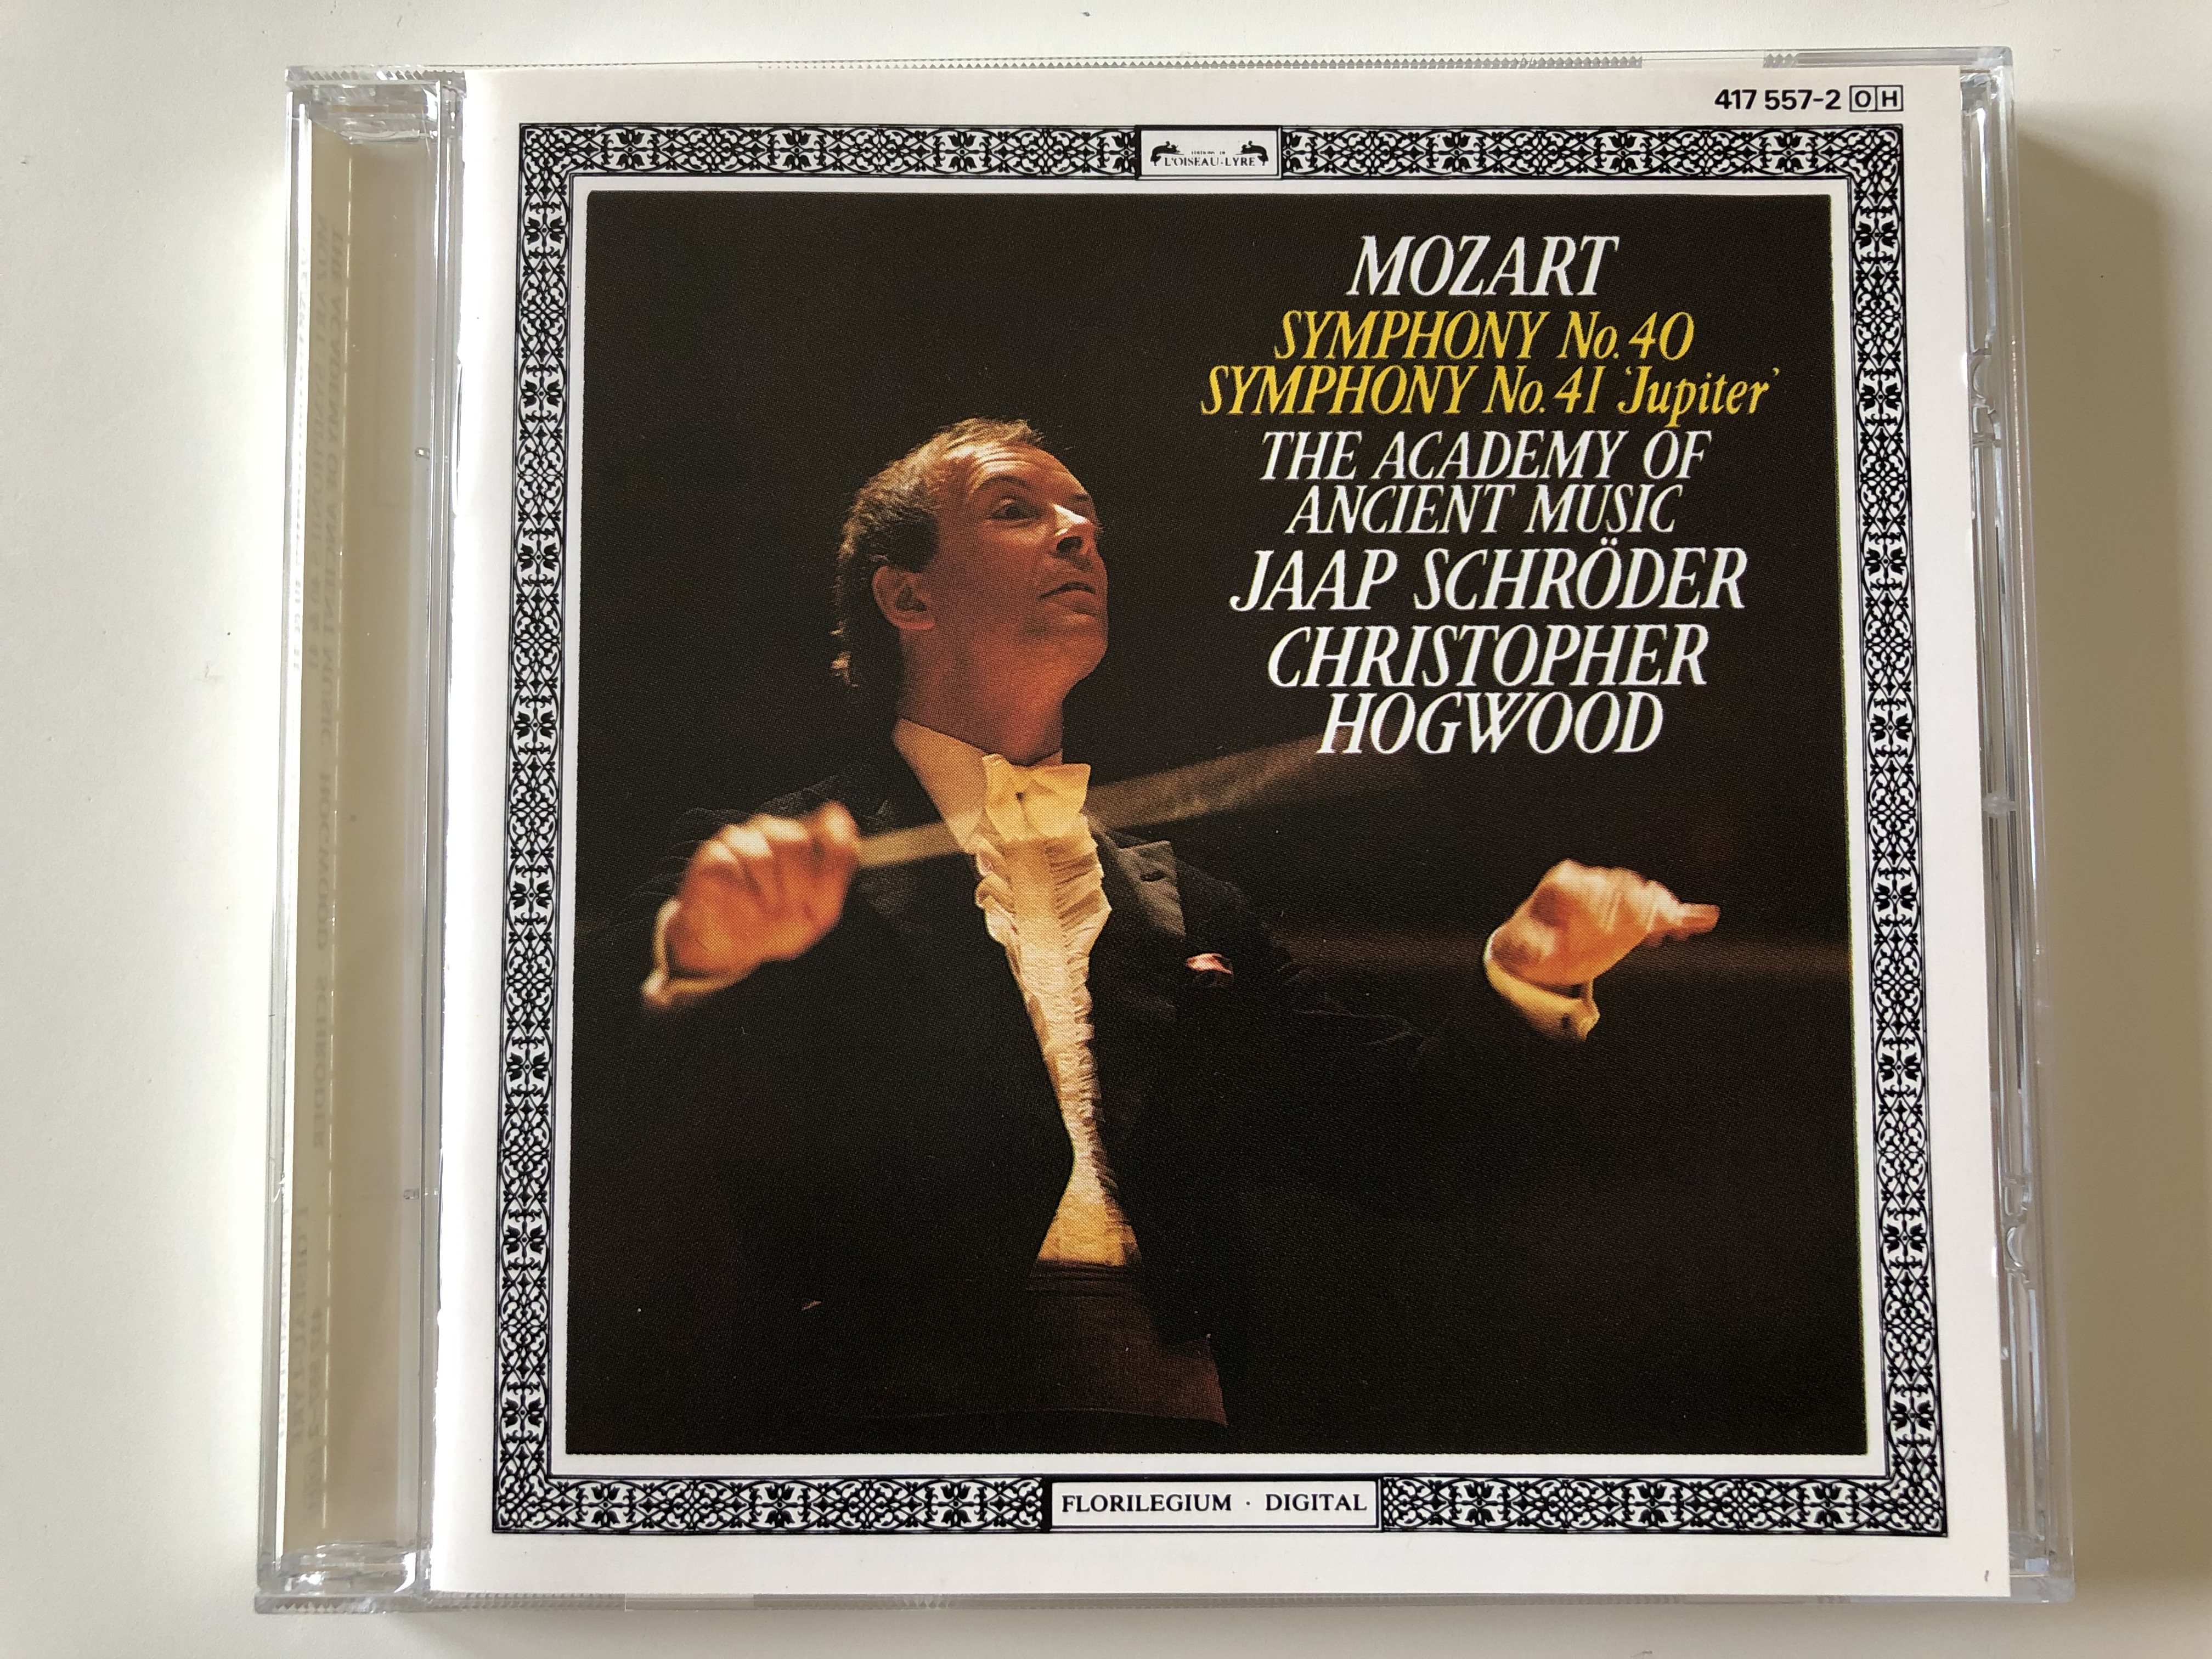 mozart-symphony-no.-40-symphony-no.-41-jupiter-the-academy-of-ancient-music-jaap-schr-der-christopher-hogwood-the-decca-record-co.-ltd-audio-cd-1986-stereo-417-557-2-1-.jpg